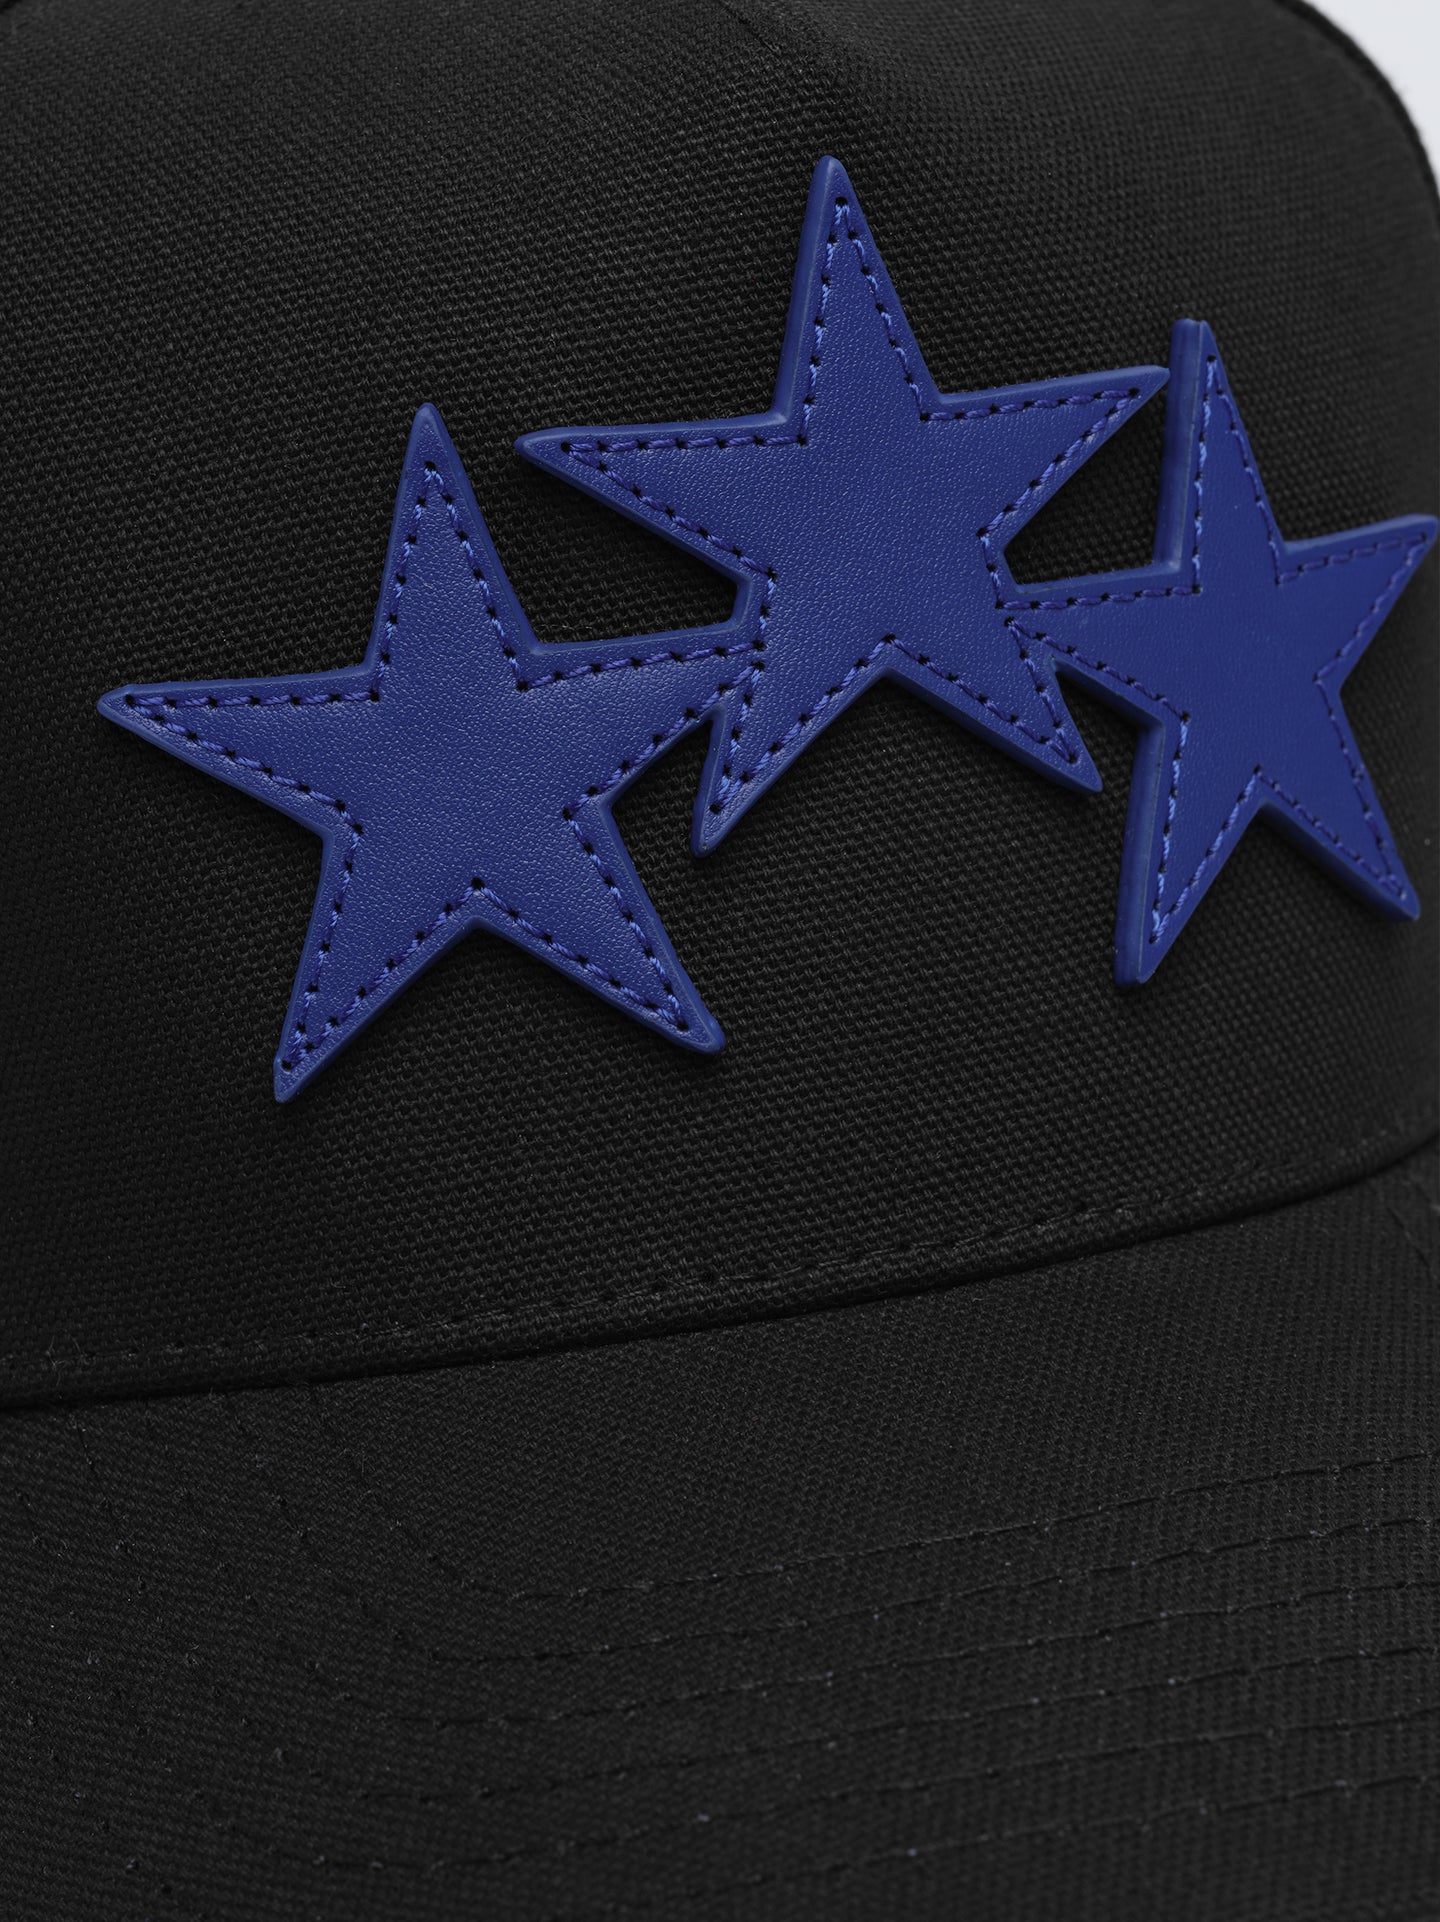 THREE STAR STAGGERED AMIRI FULL CANVAS HAT - Black Blue